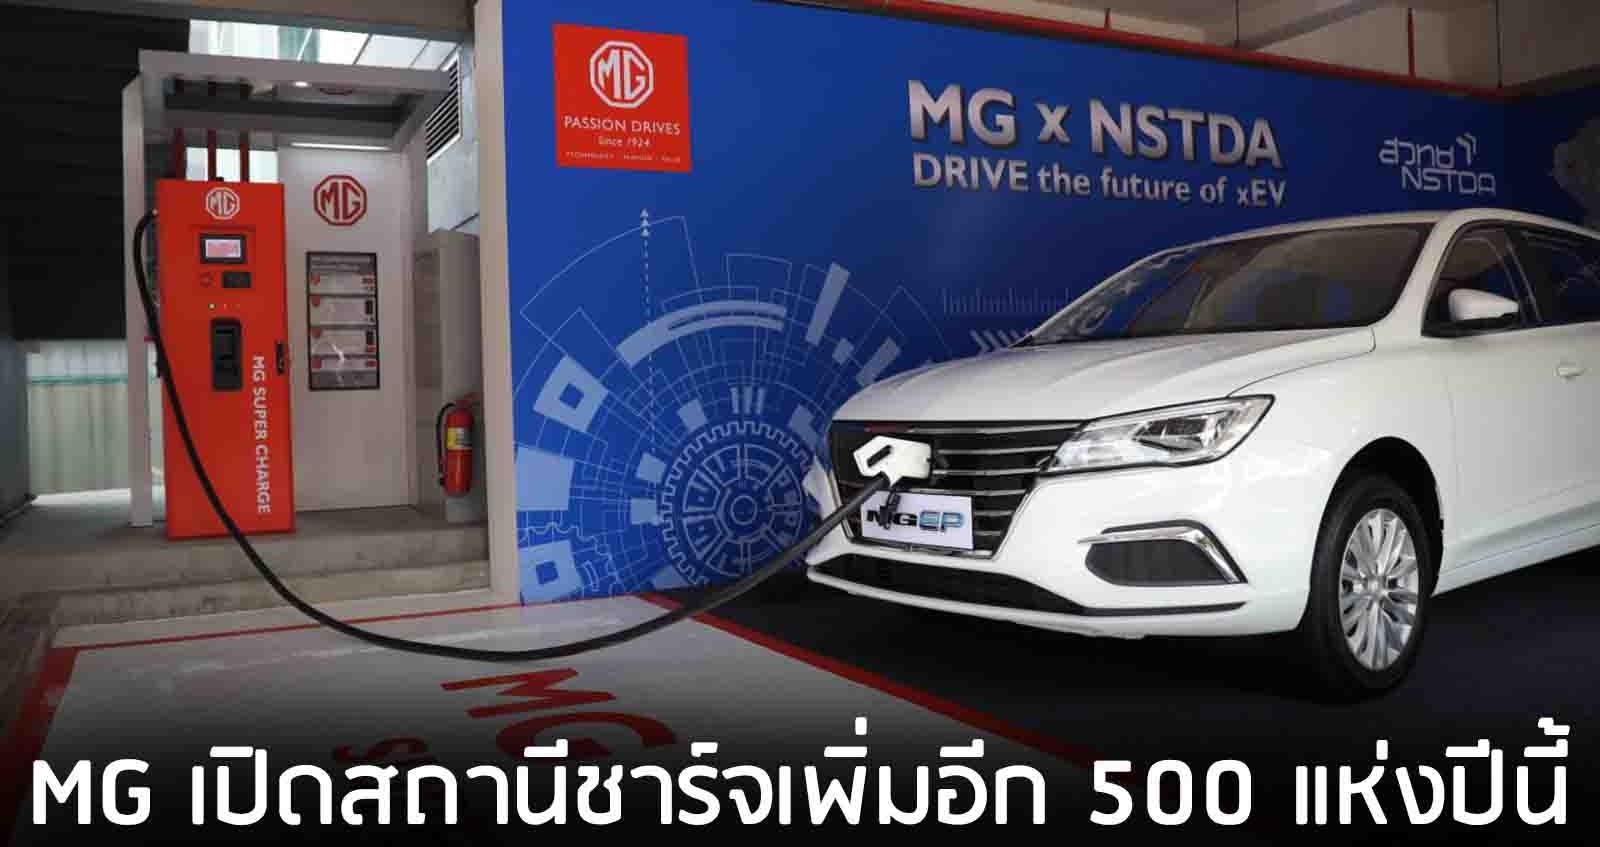 MG ไทย เตรียมเปิดสถานีชาร์จไฟฟ้า 500 แห่ง EV Charging Station ภายในปีนี้